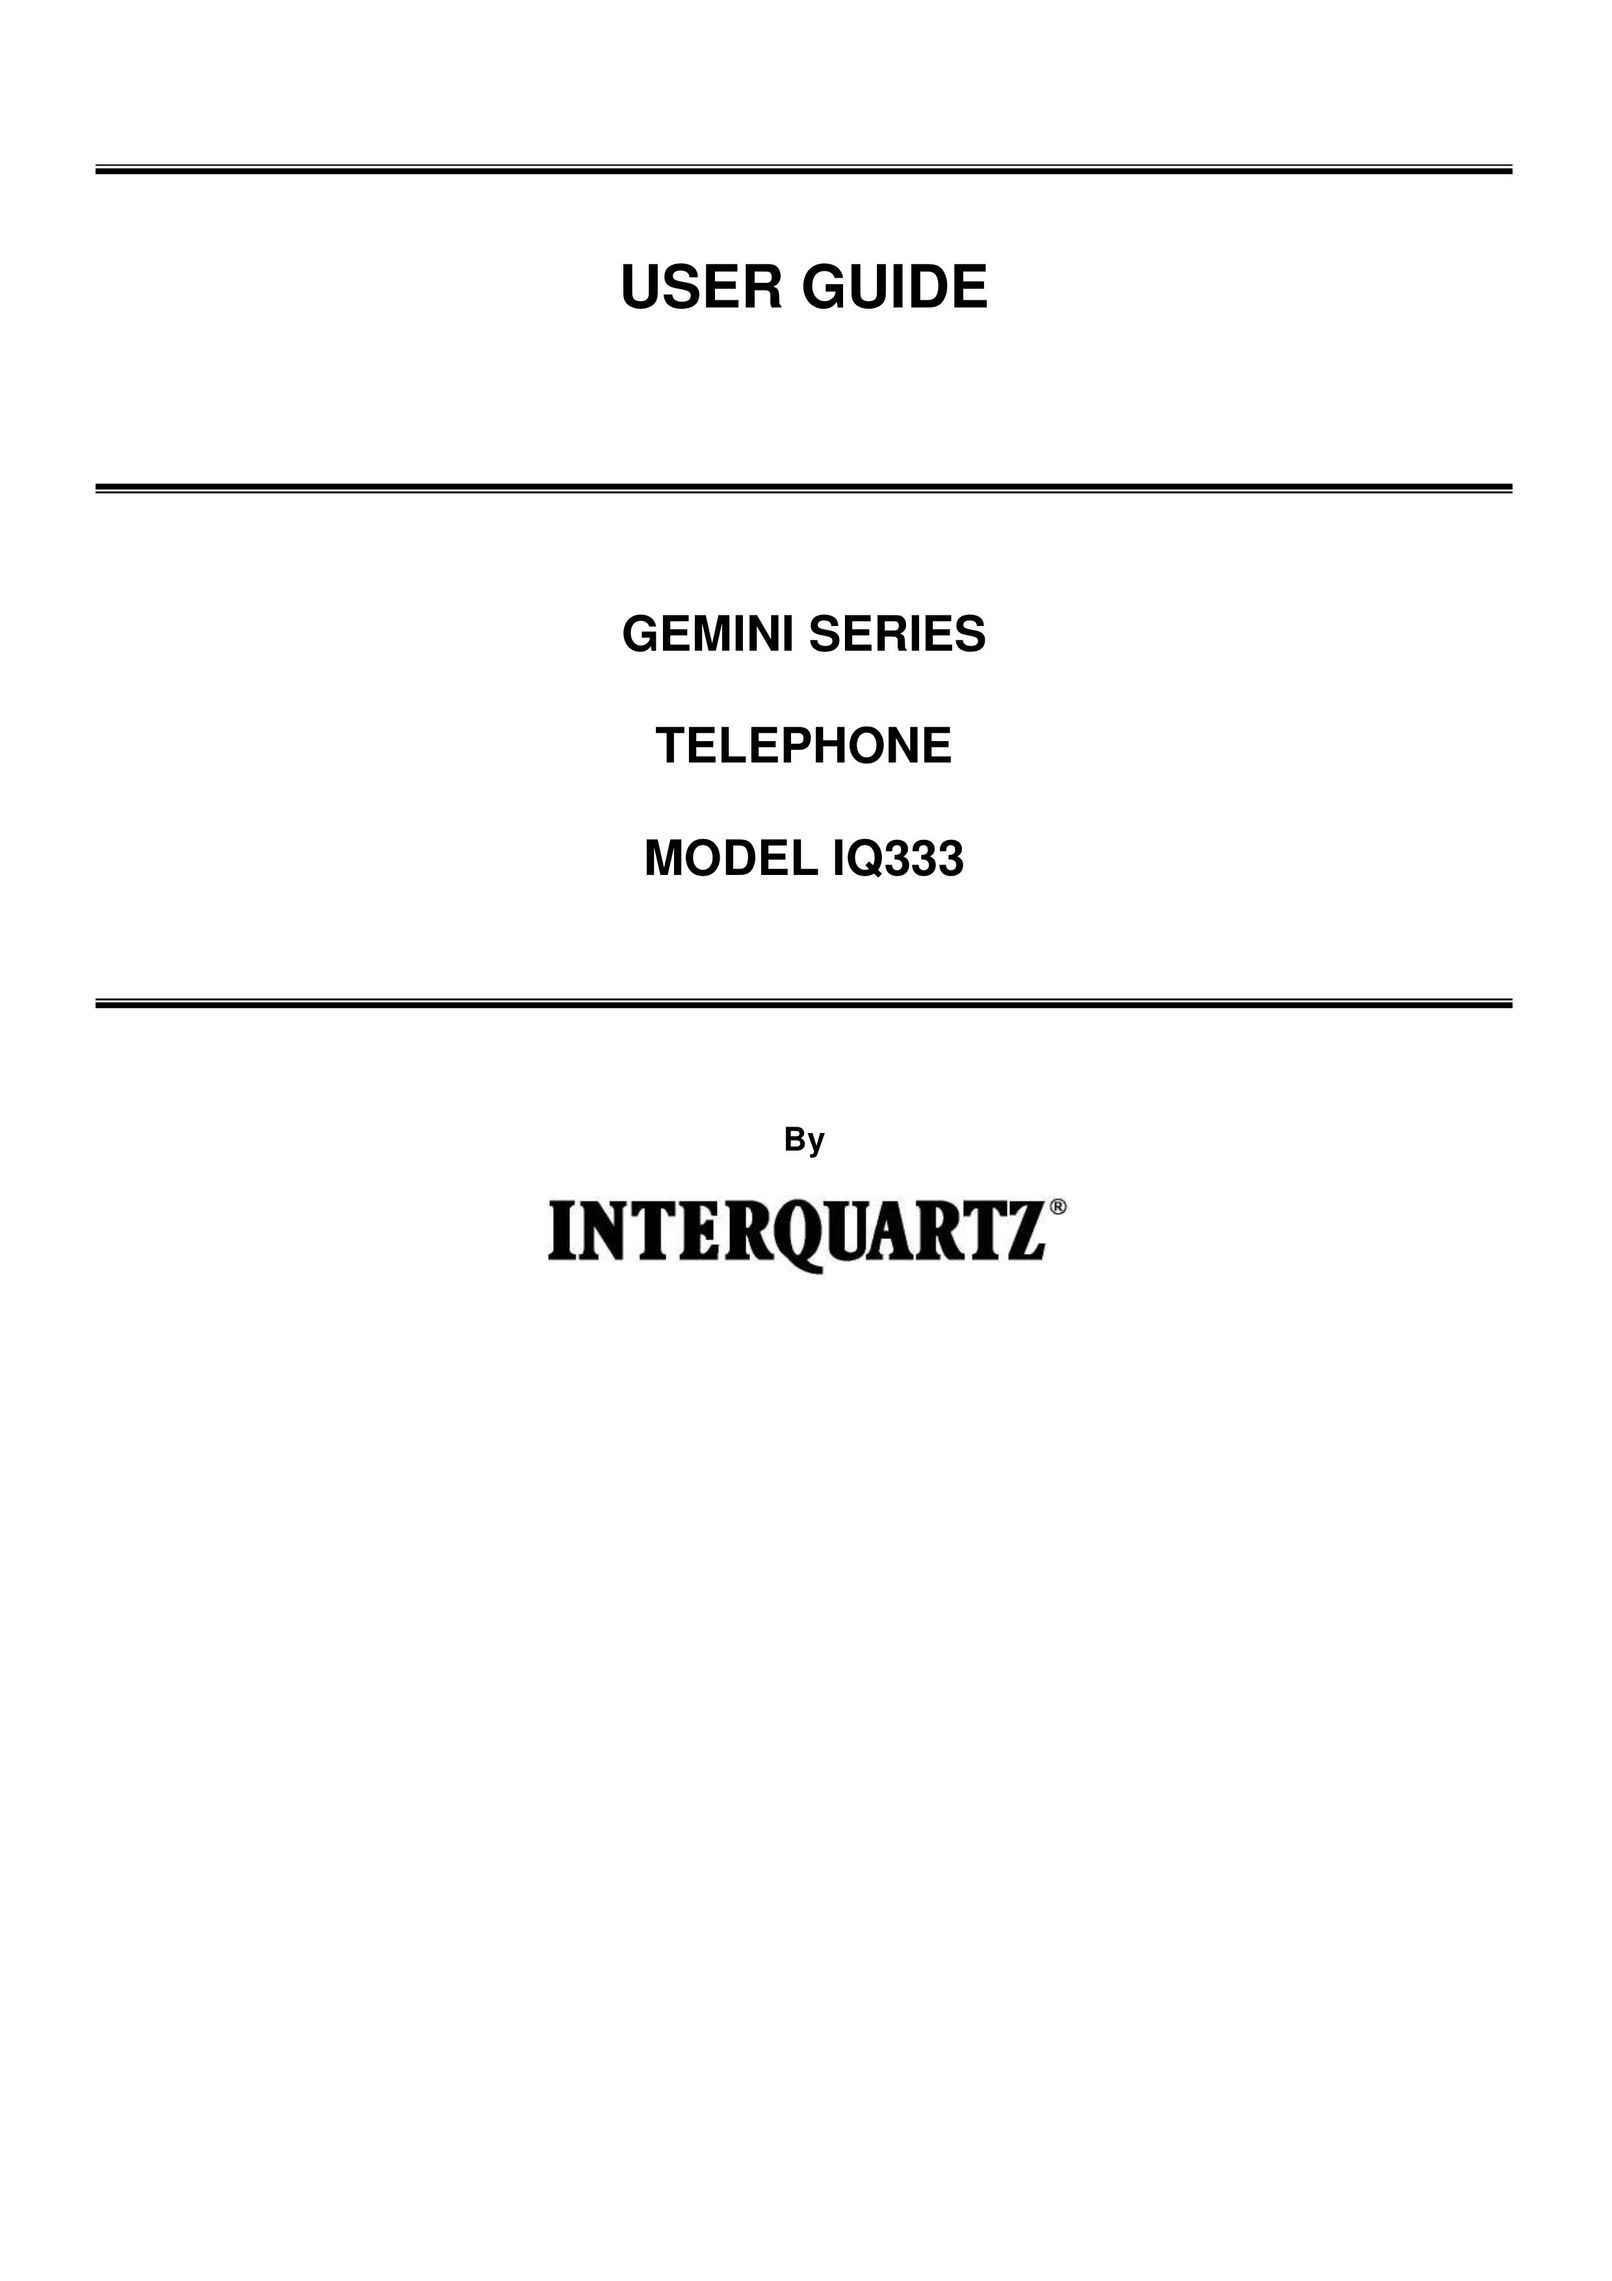 Interquartz IQ333 Telephone User Manual